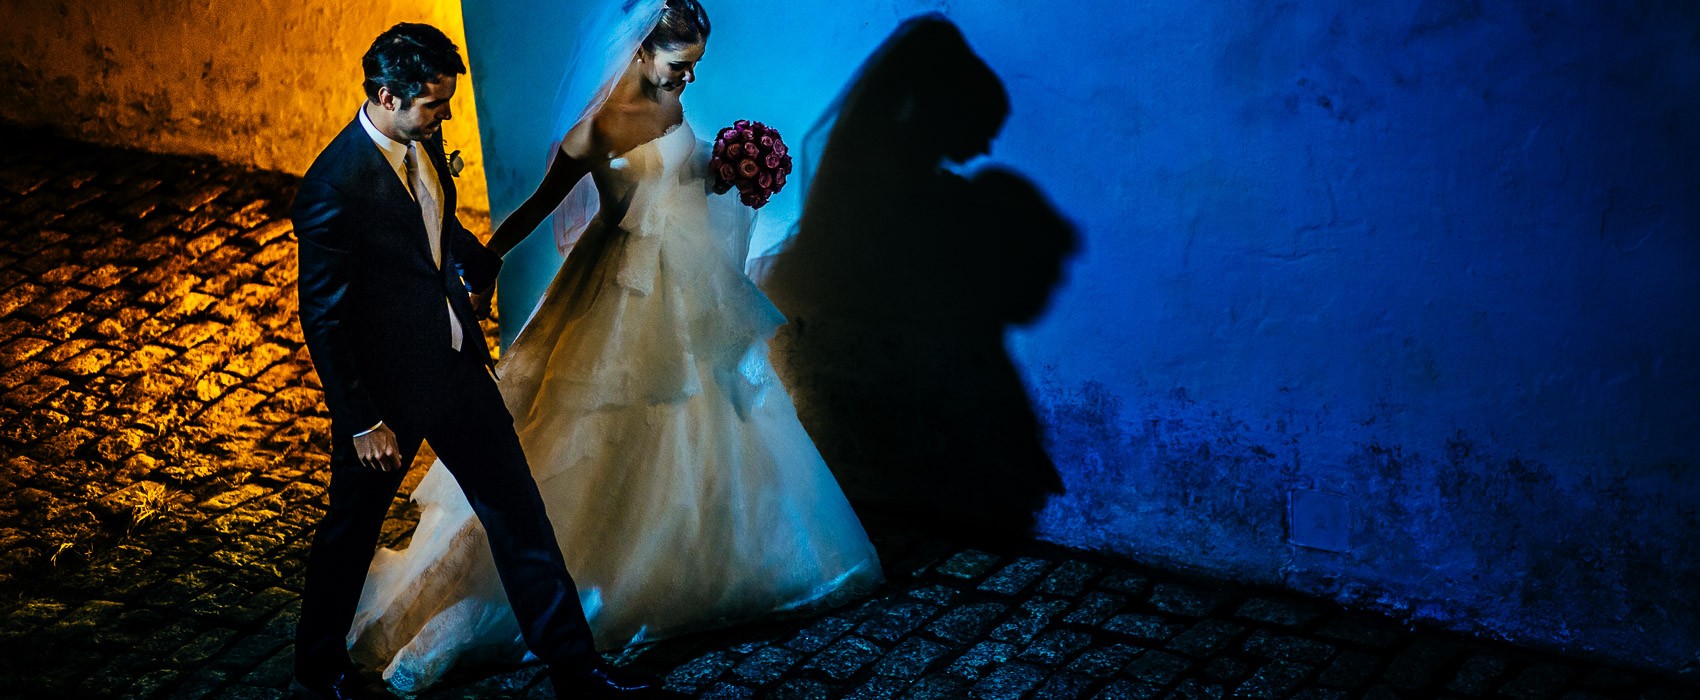 fotografo casamento florianopolis renato dpaula